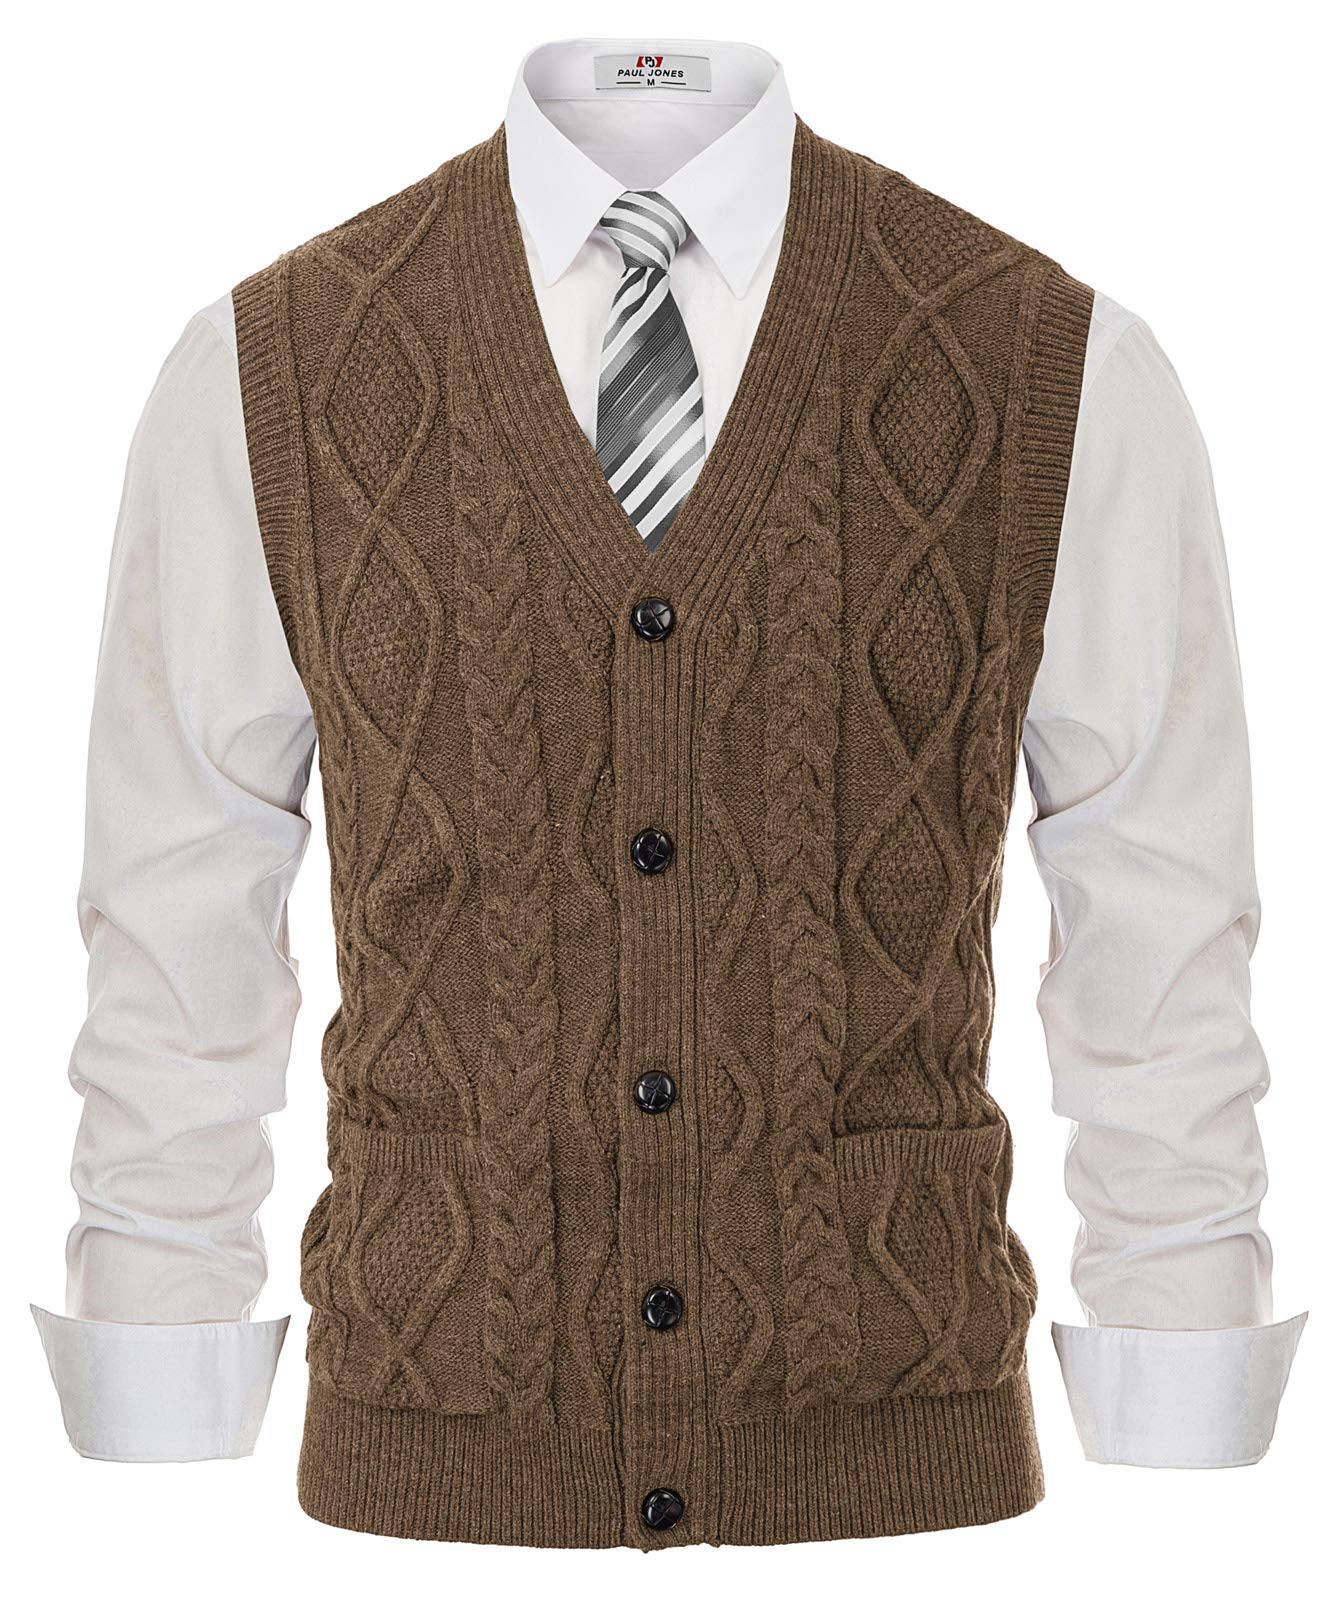 Cable Knit Sweater Vest Without Blouse | Vest outfits for women, Knit  sweater outfit, Knit vest outfit